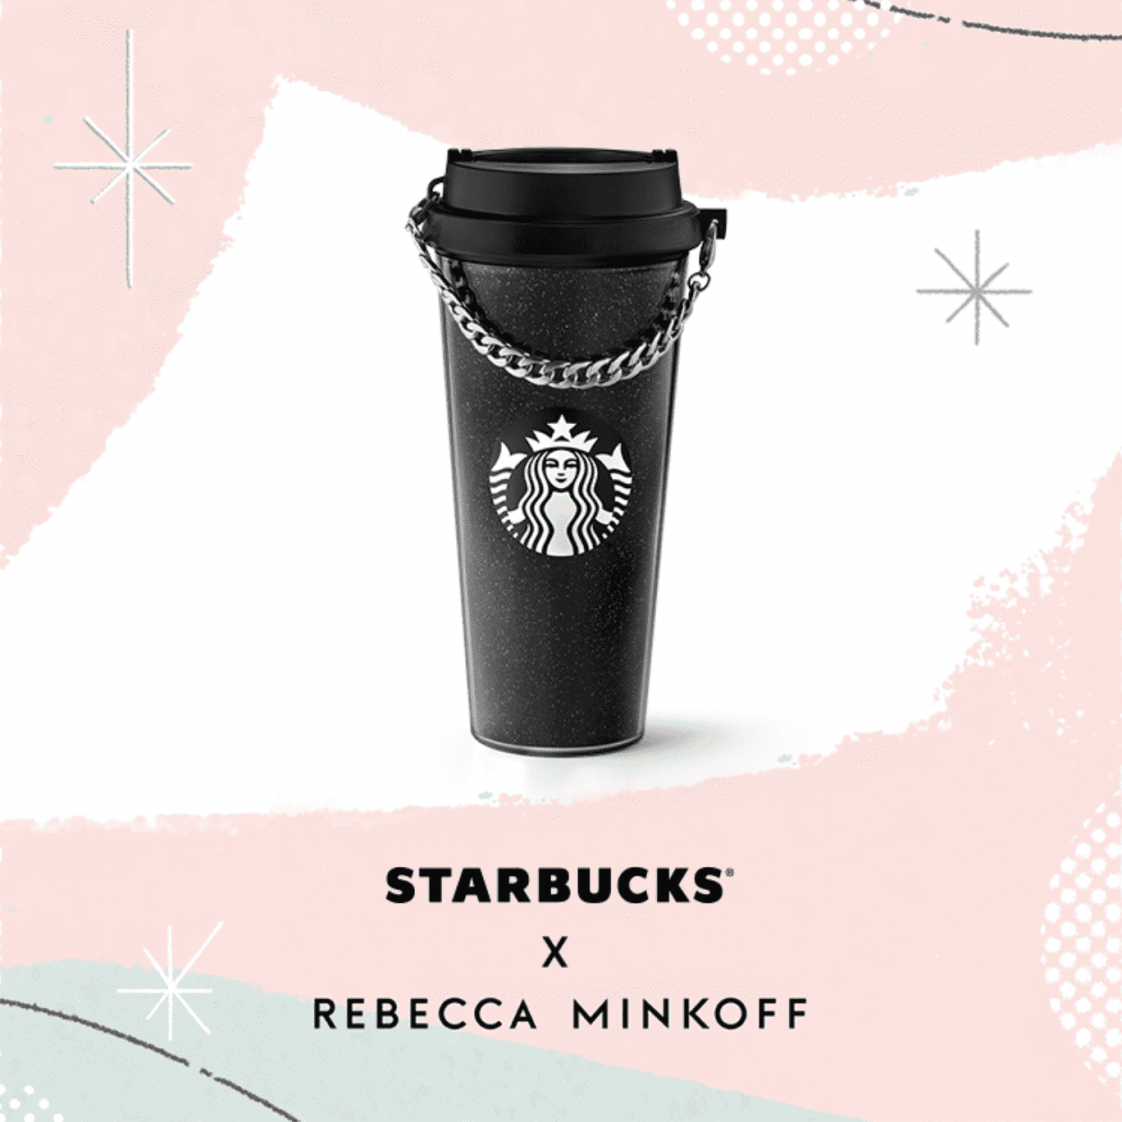 New Edgy Starbucks Designer Collection X Rebecca Minkoff! - Shout